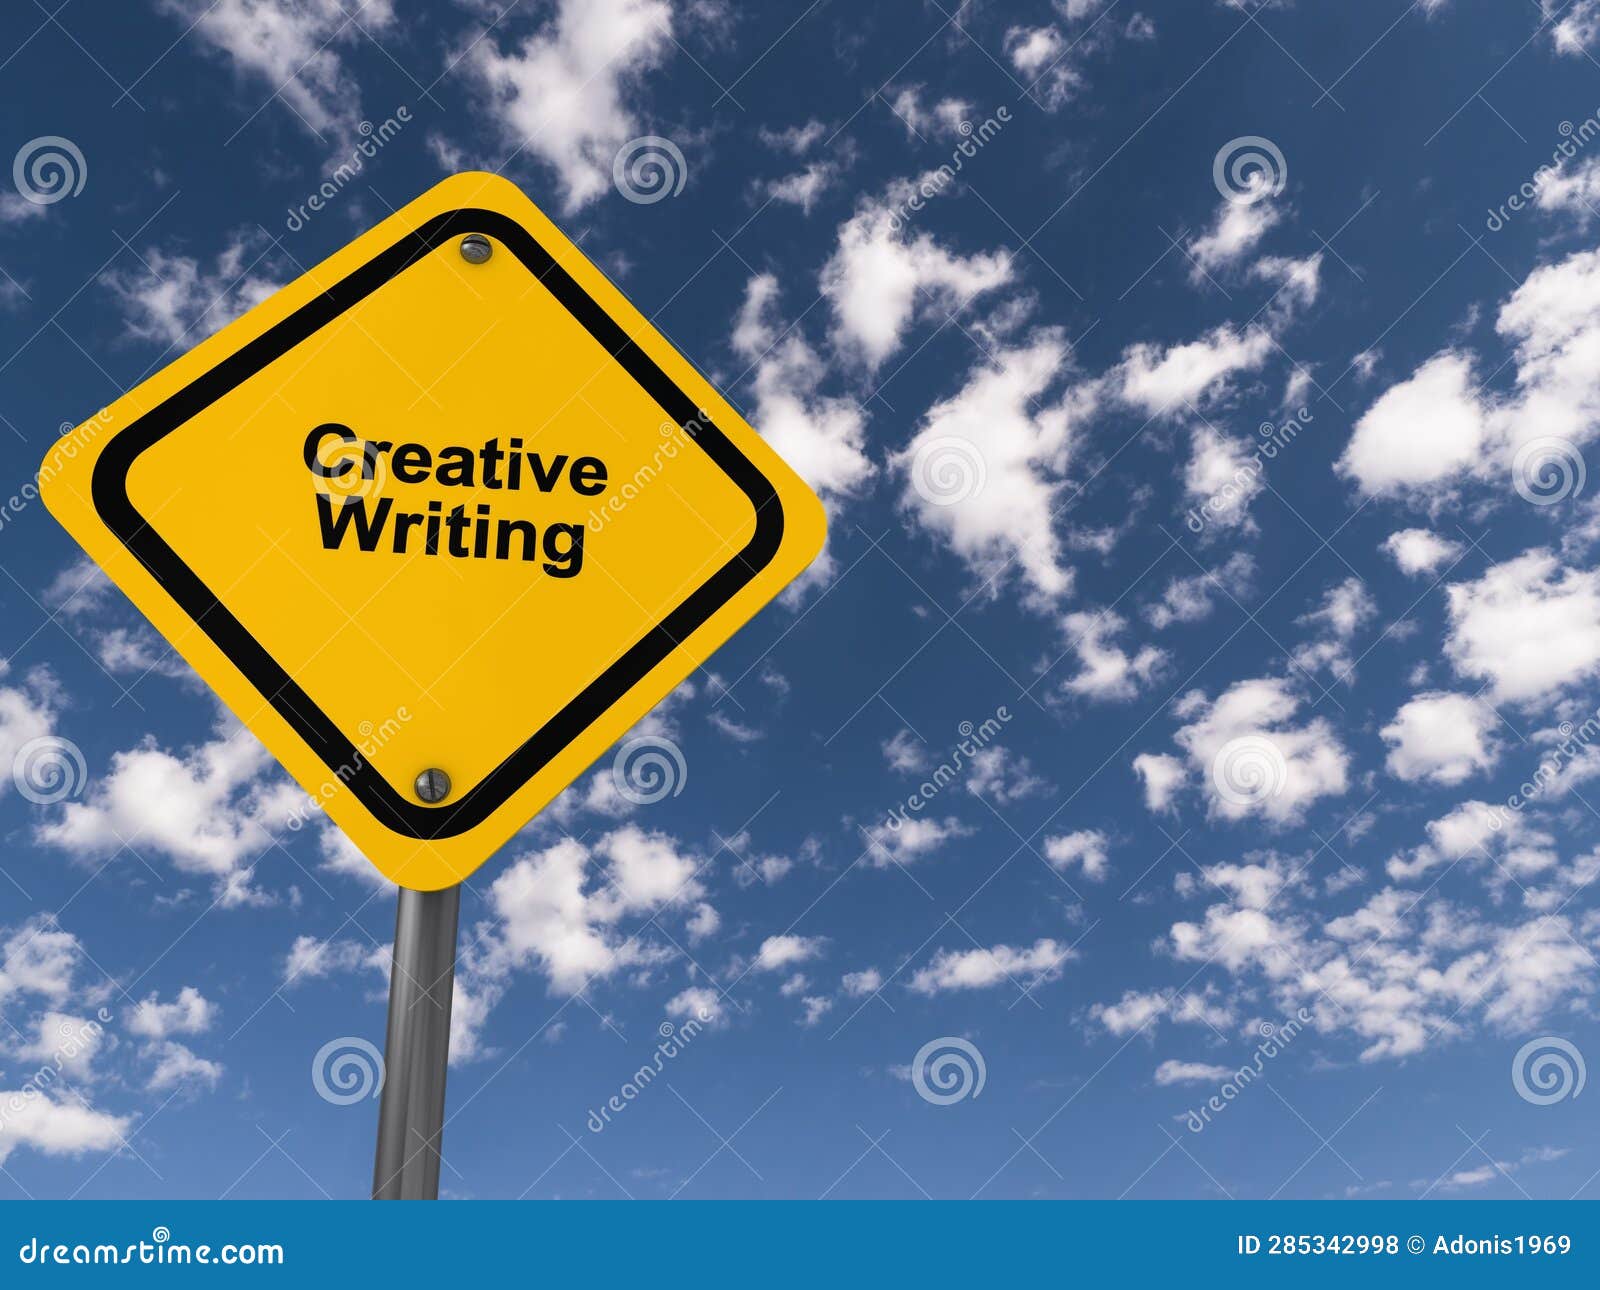 creative writing traffic sign on blue sky